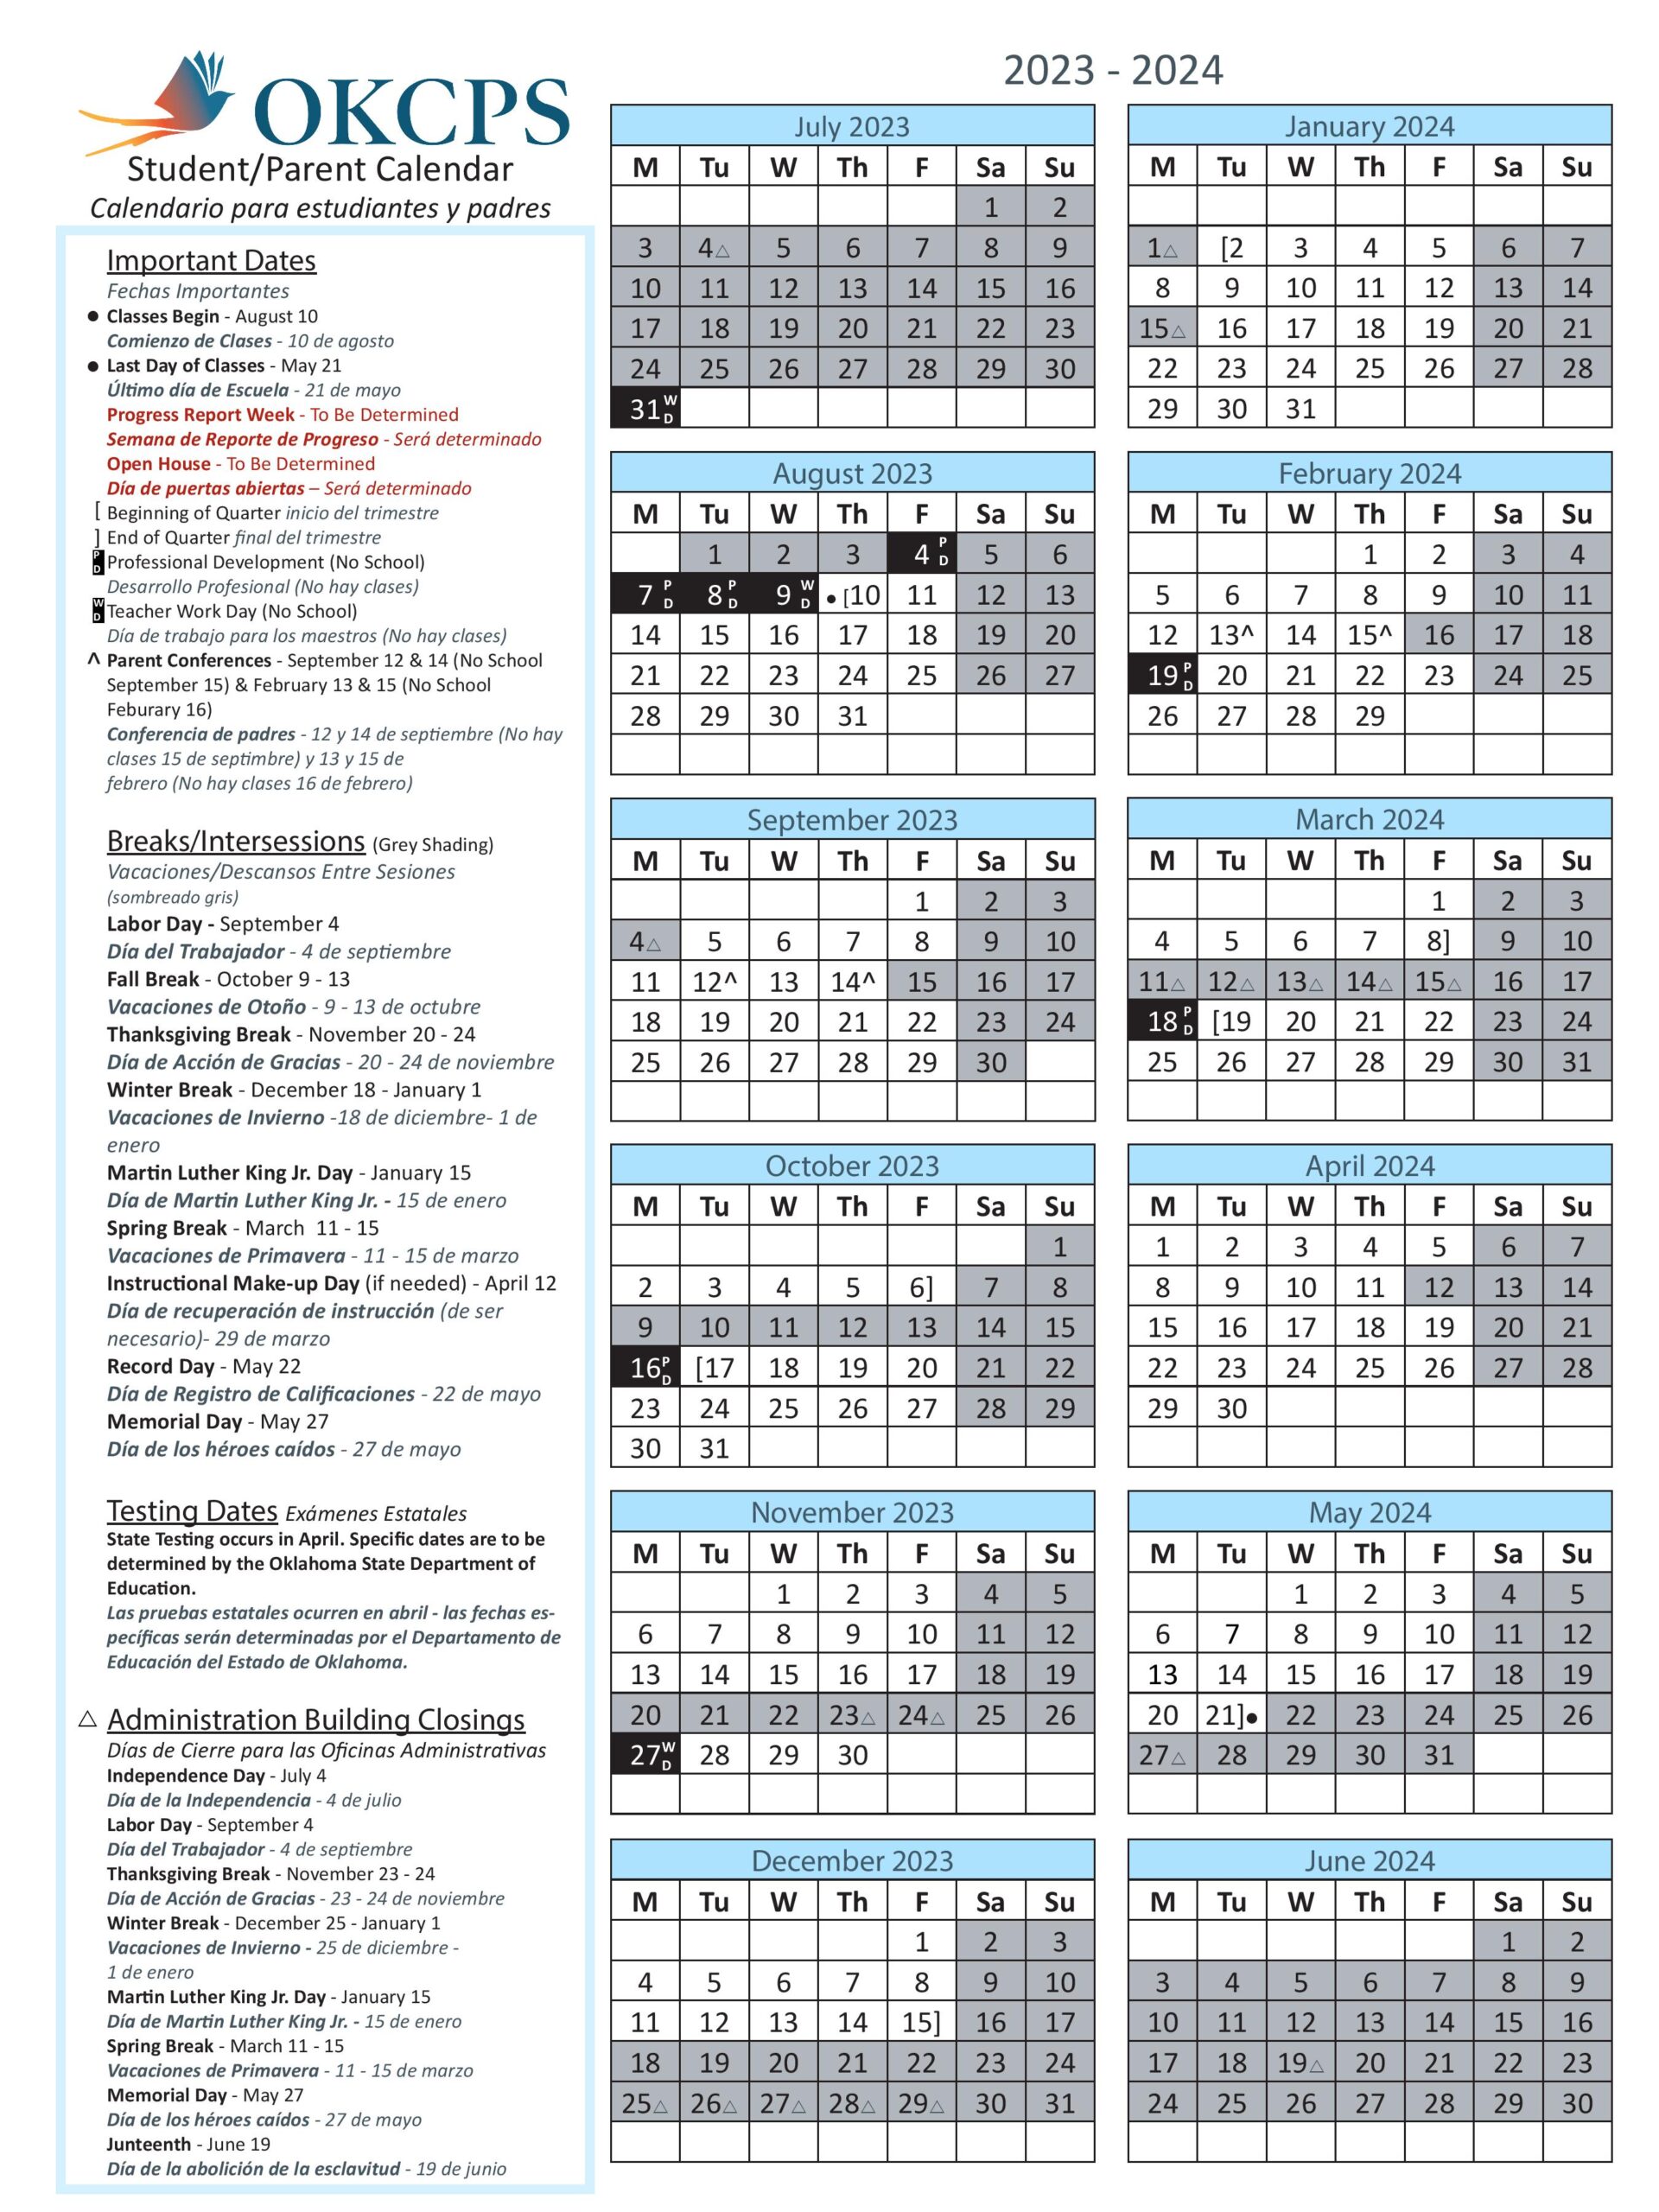 oklahoma-city-public-schools-calendar-holidays-2023-2024-pdf